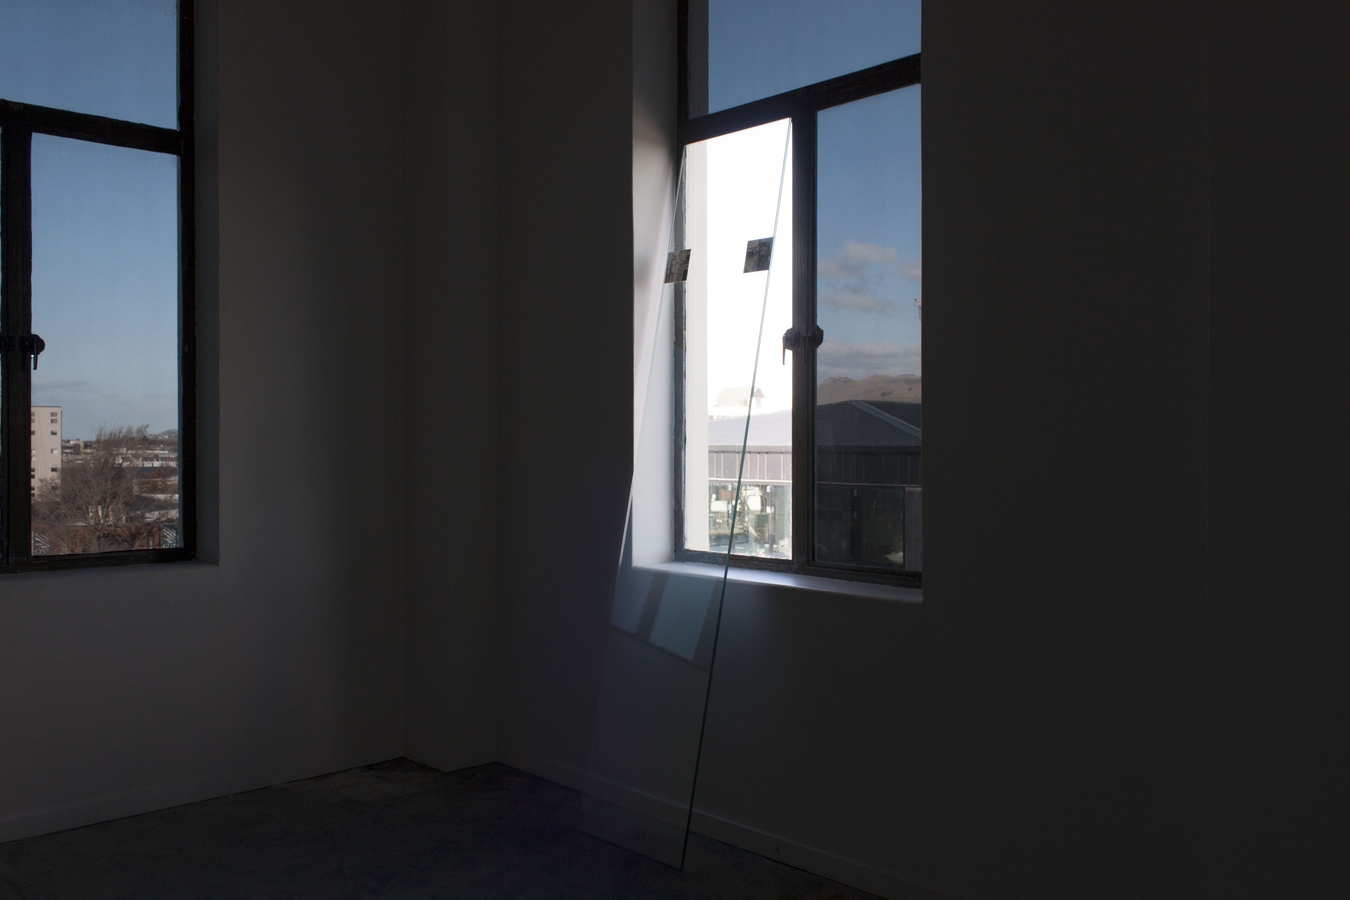 Amy Howden-Chapman, Brick Fall, Glass Wall, installation view Image: Daegan Wells